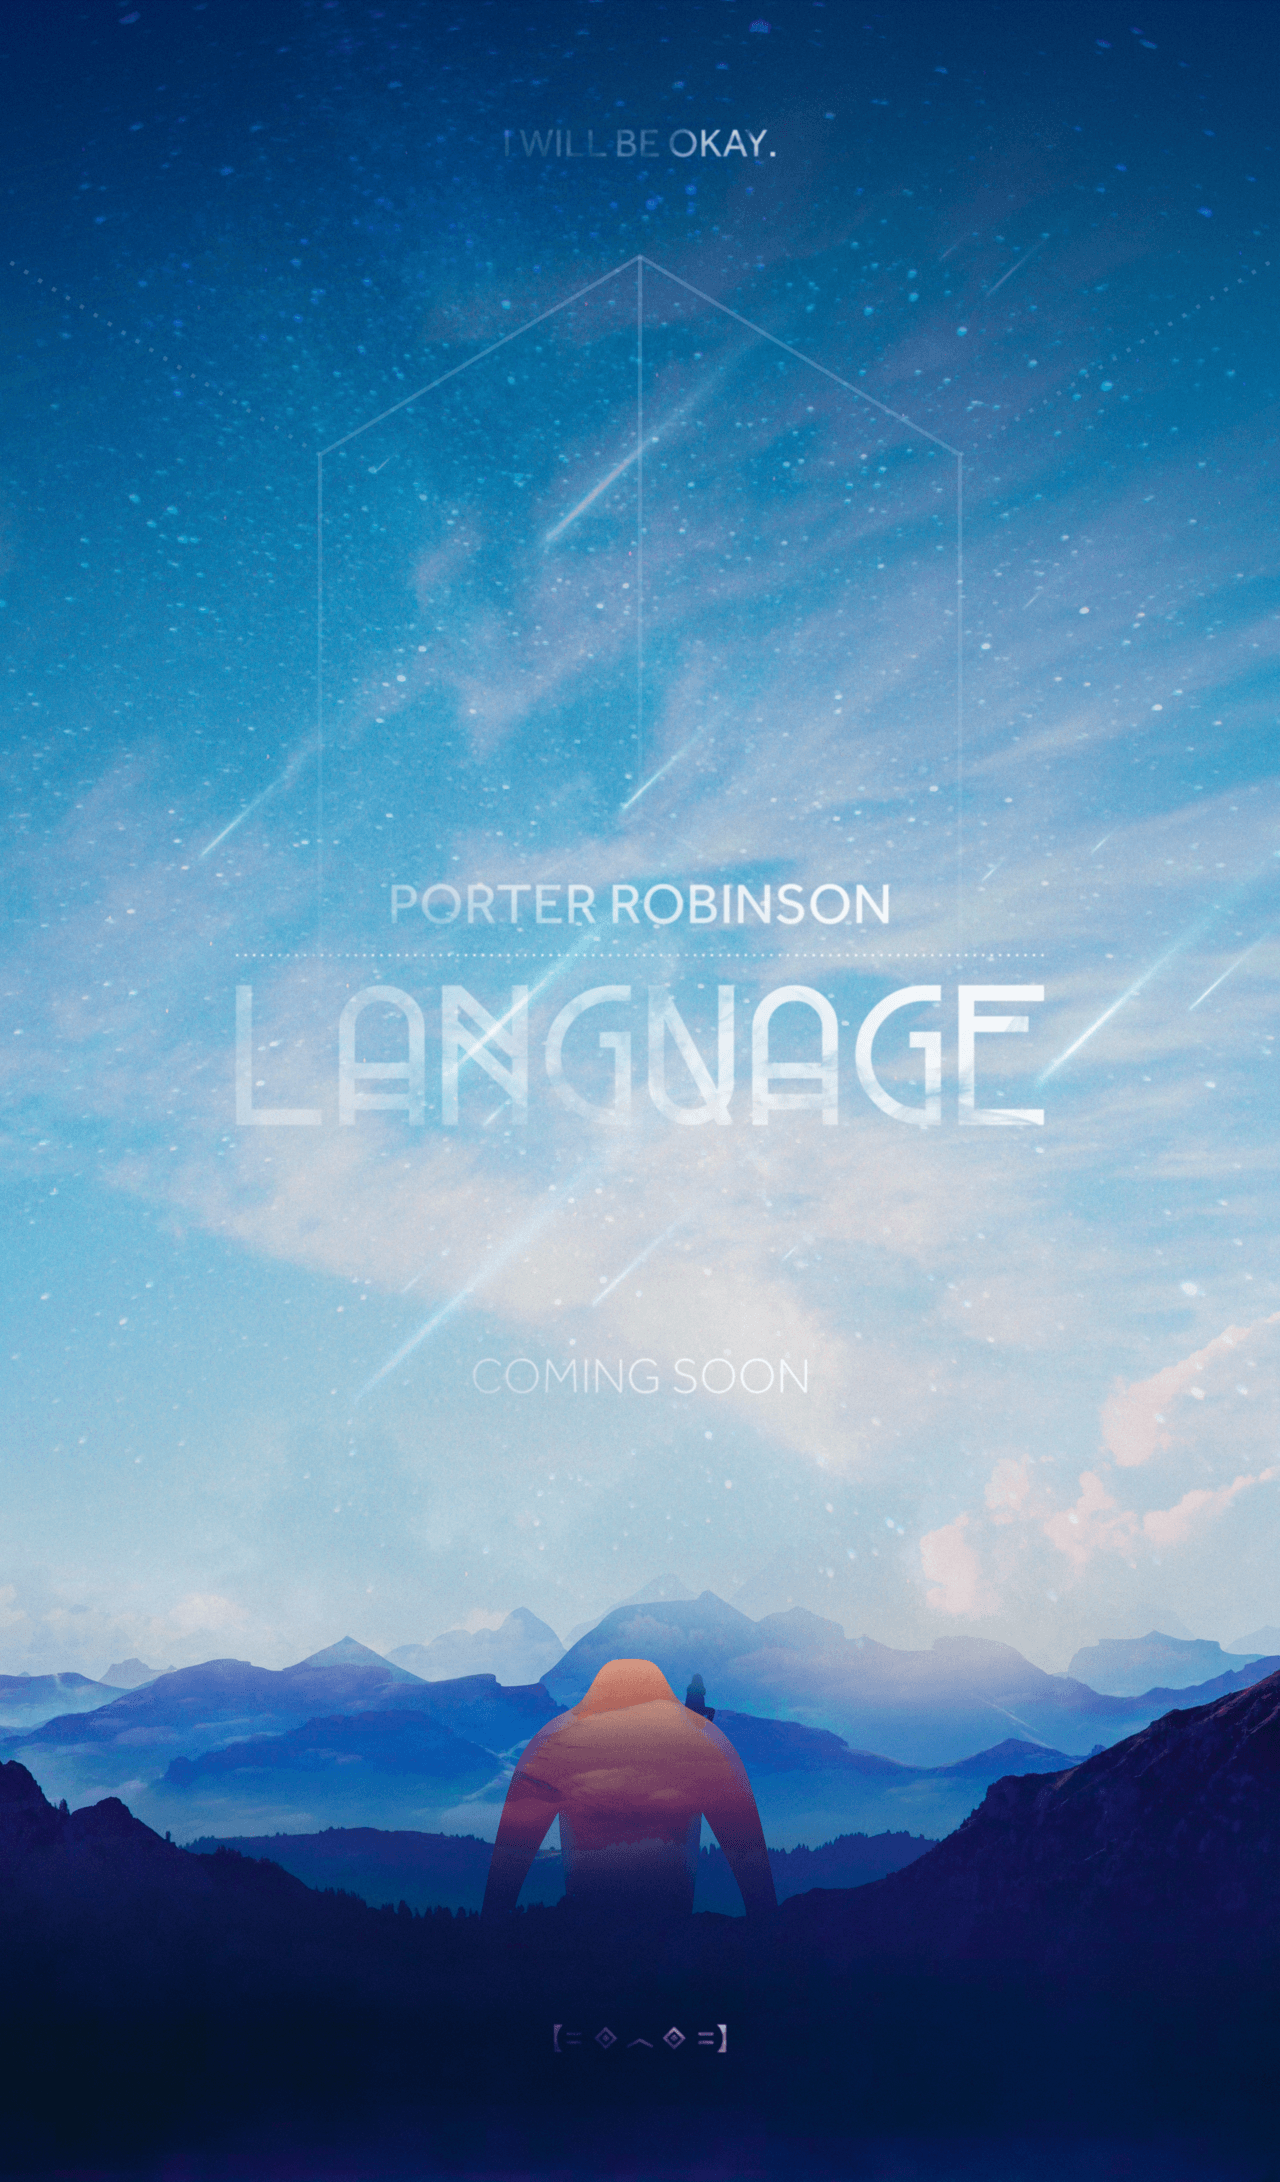 Porter Robinson movie poster